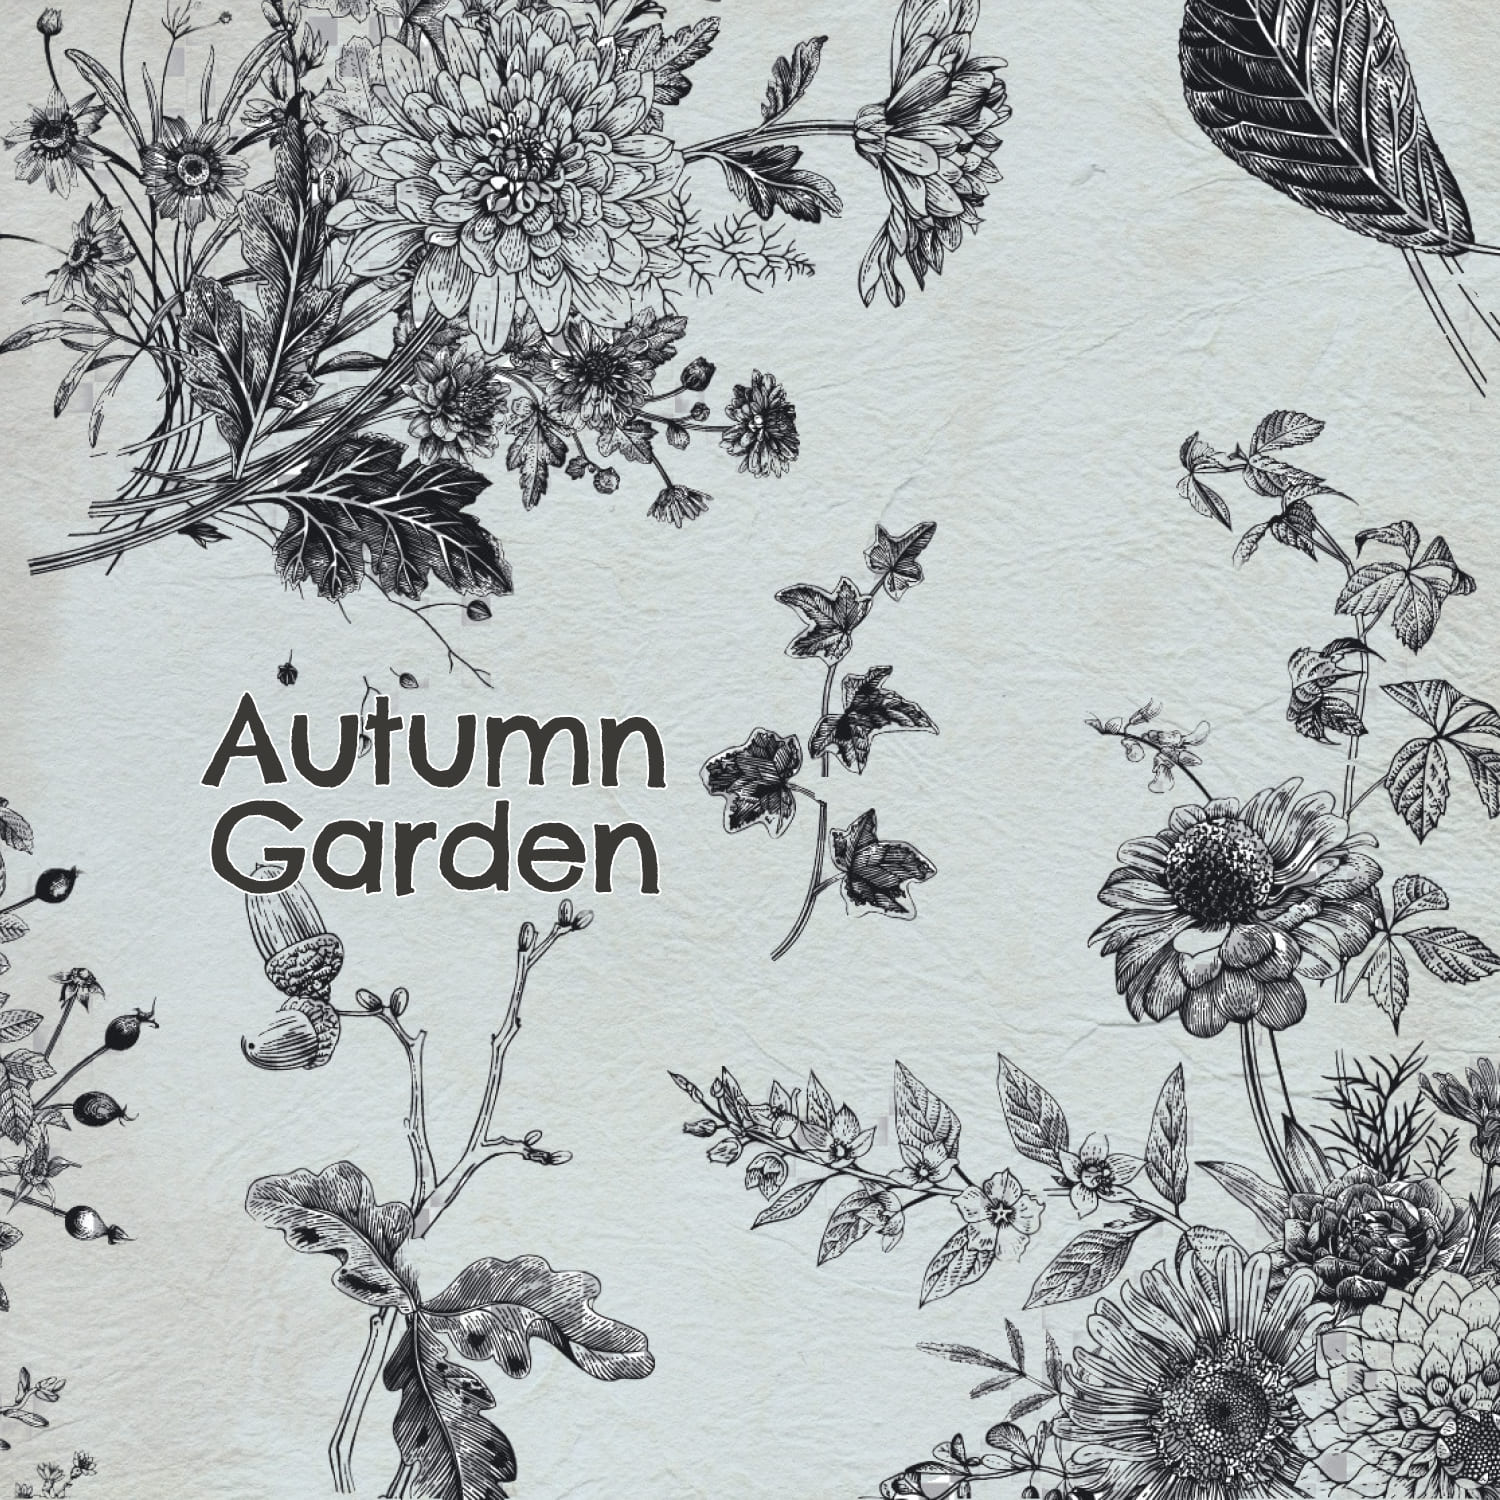 Autumn Garden. B&W - preview image.